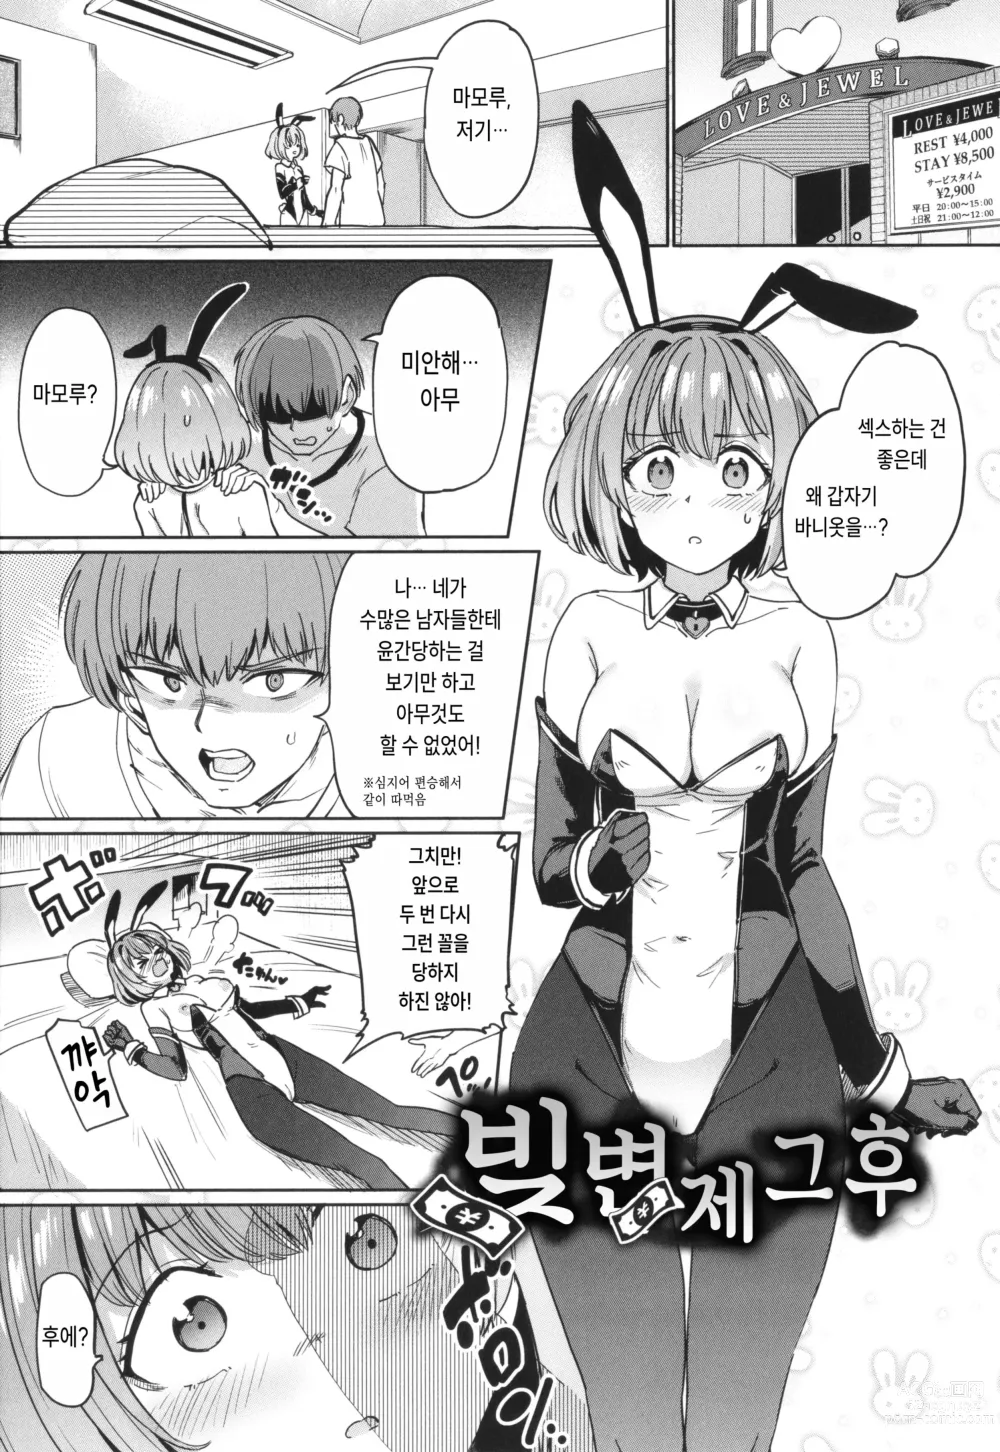 Page 151 of manga Pet Girl